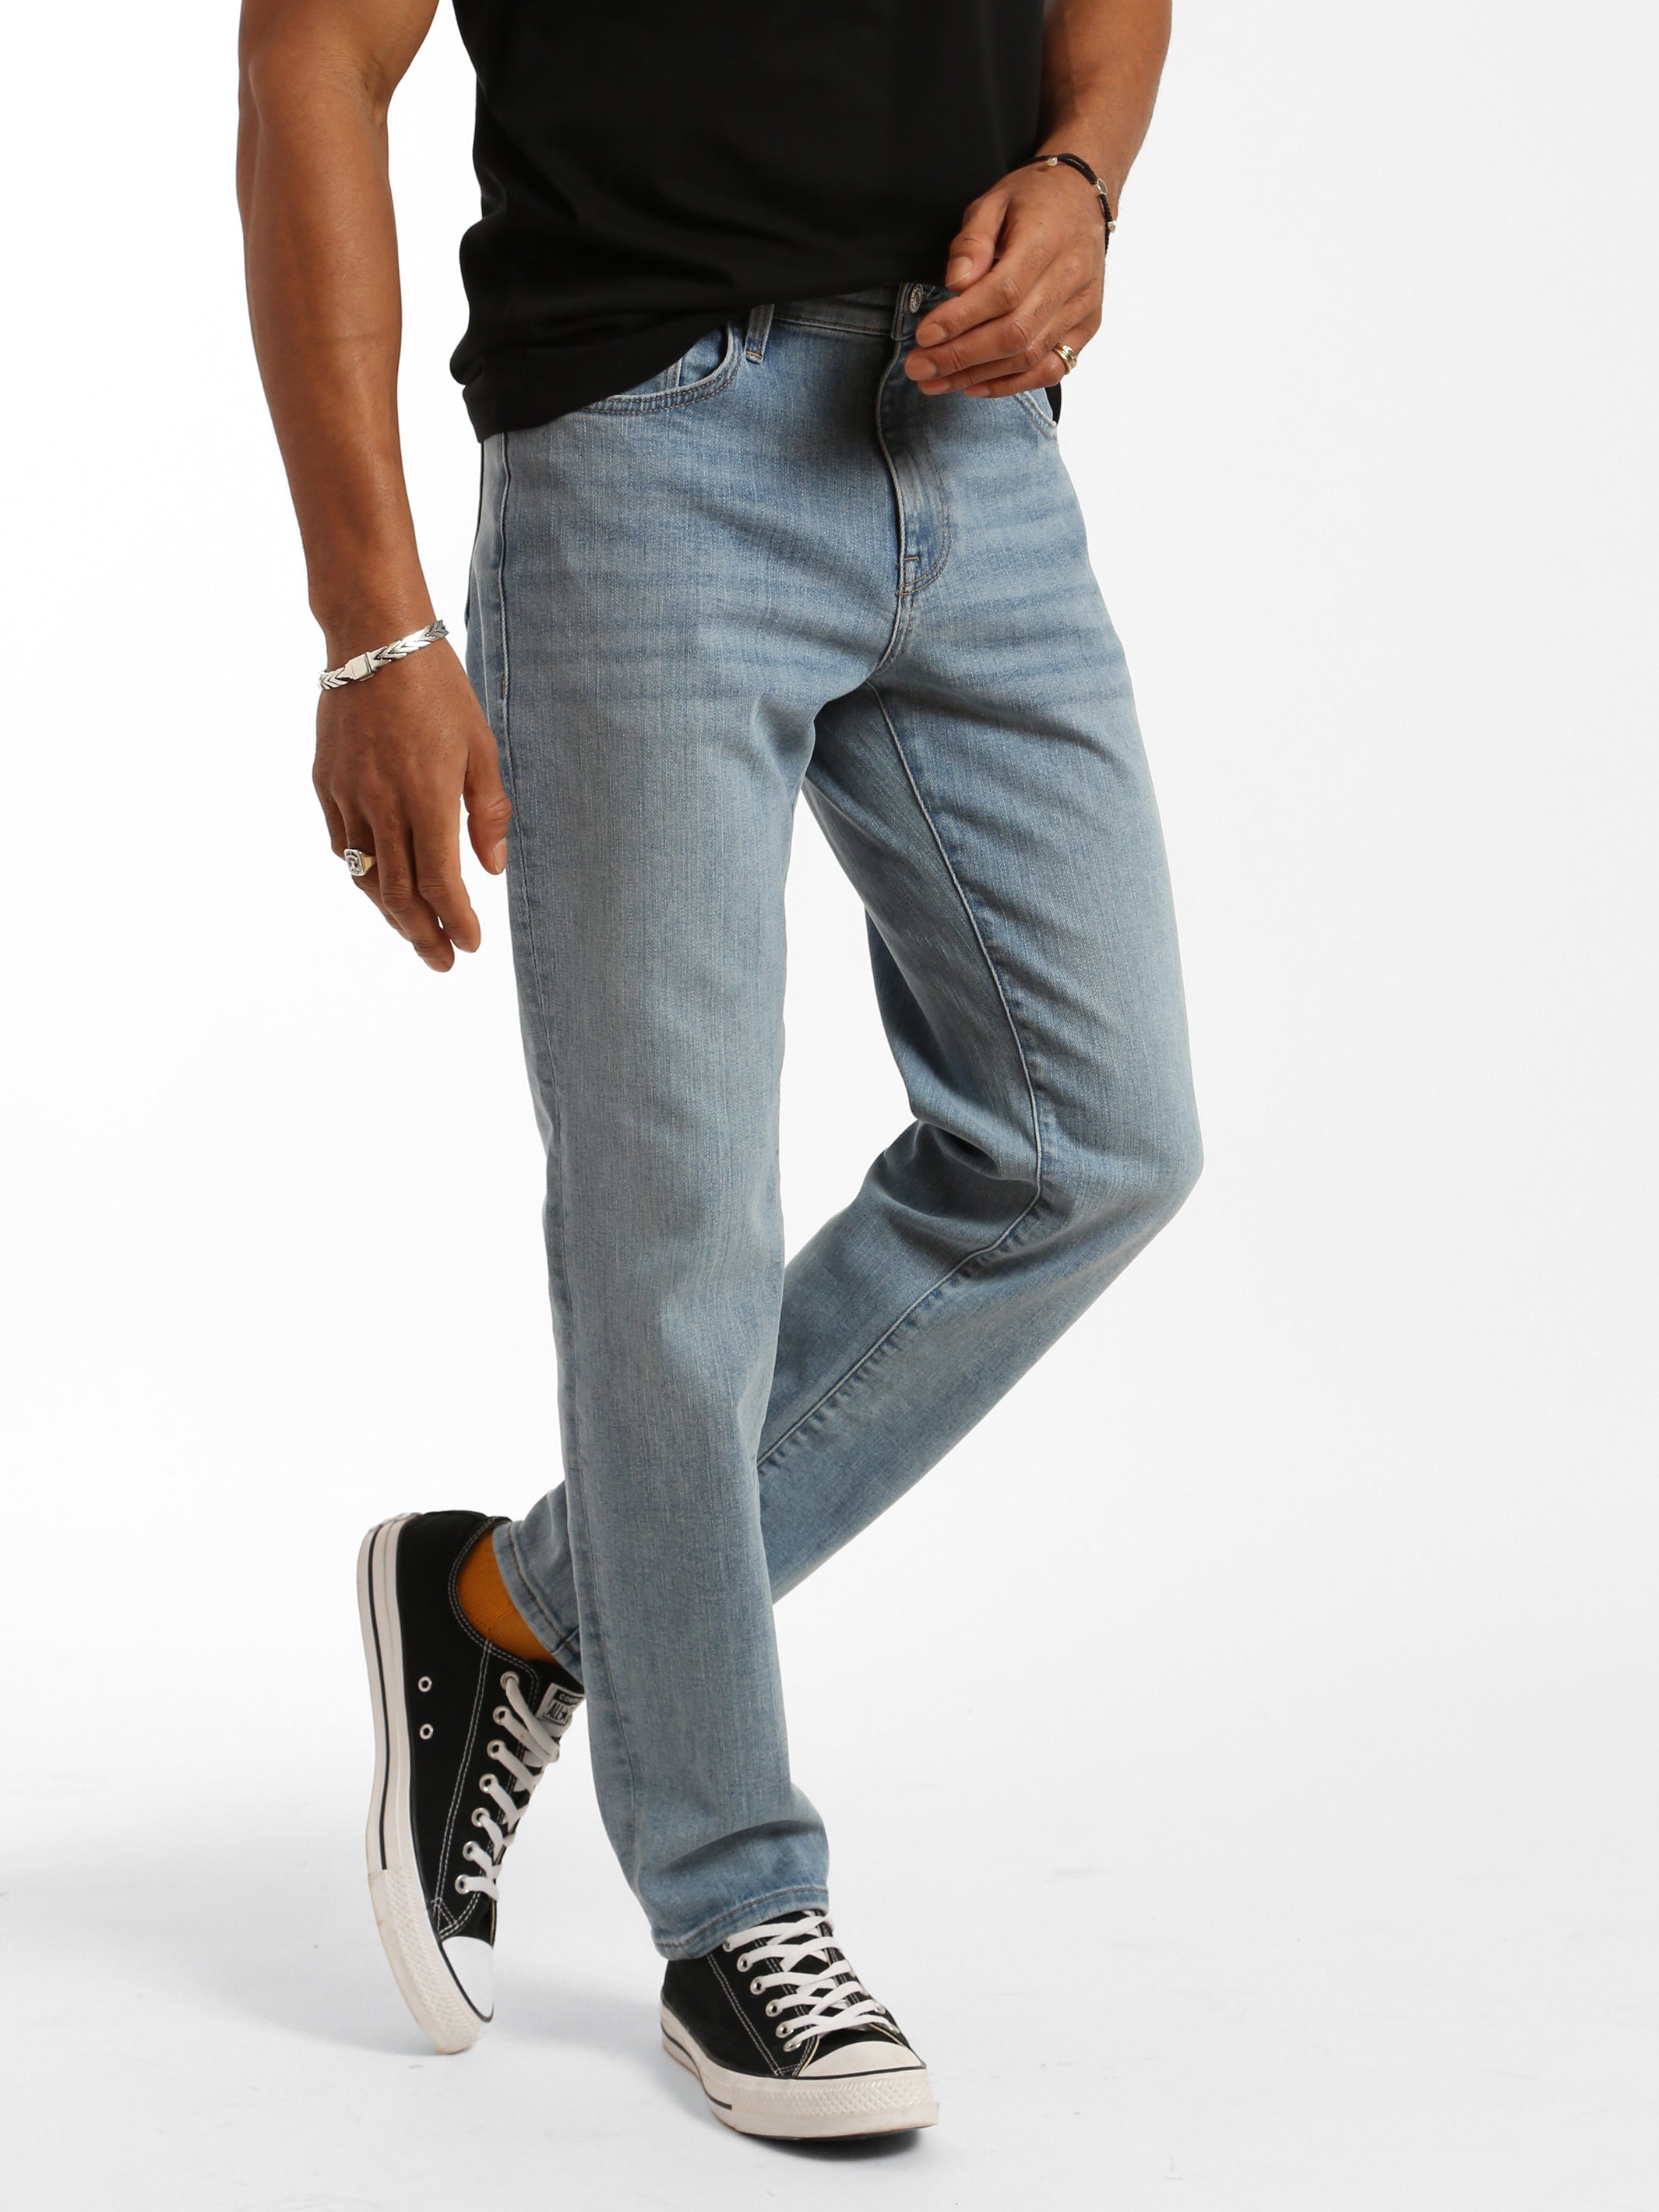 Brooklyn Industries Men's Franklin Athletic Fit Jeans in Light Brushed Denim